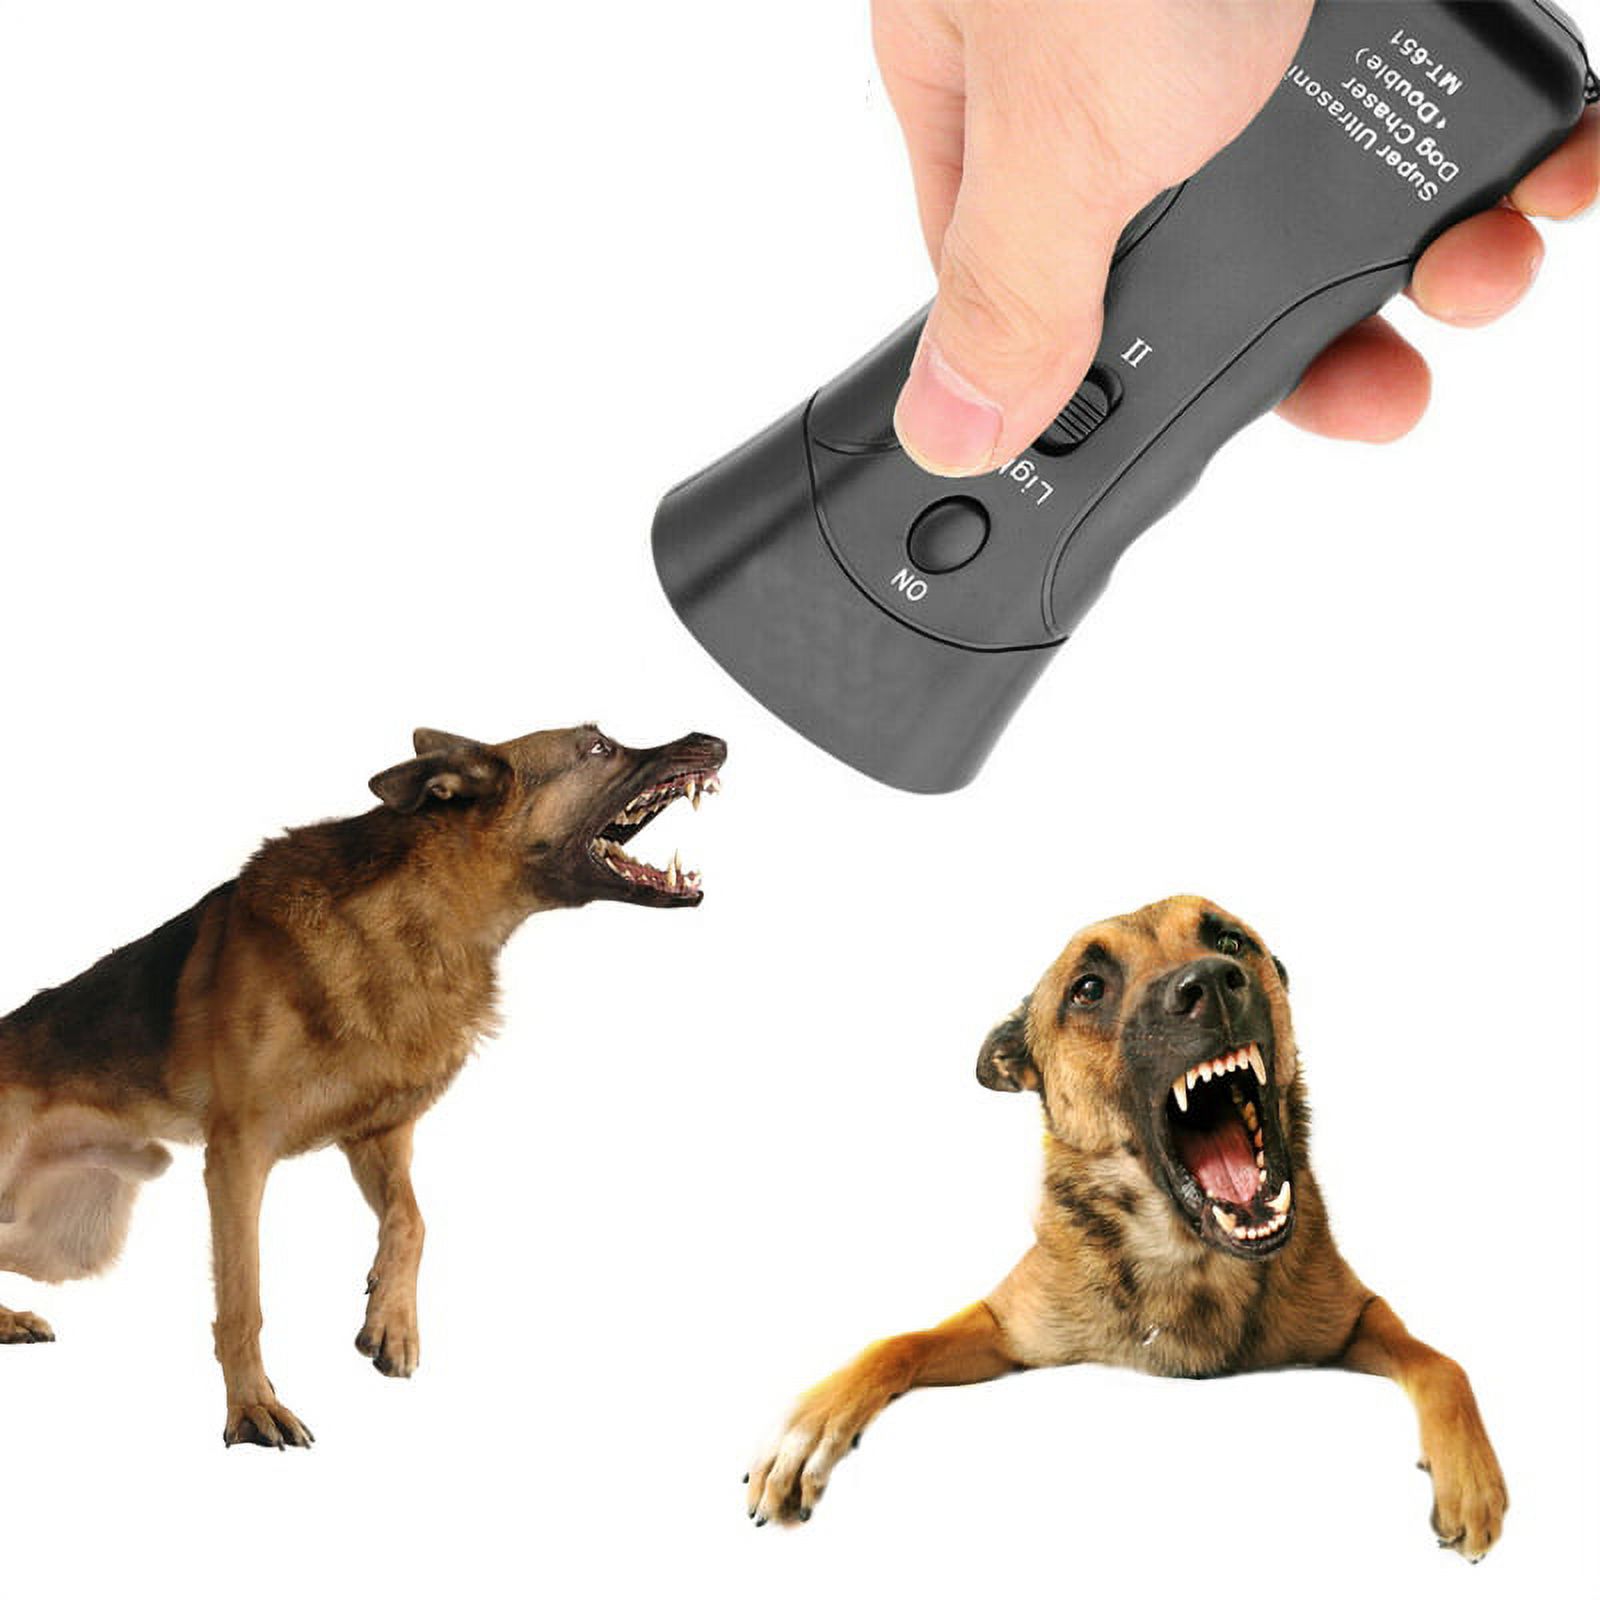 Ultrasonic Anti Dog Barking Pets Trainer LED Gentle Pet gentle Sonic Tools - image 5 of 5